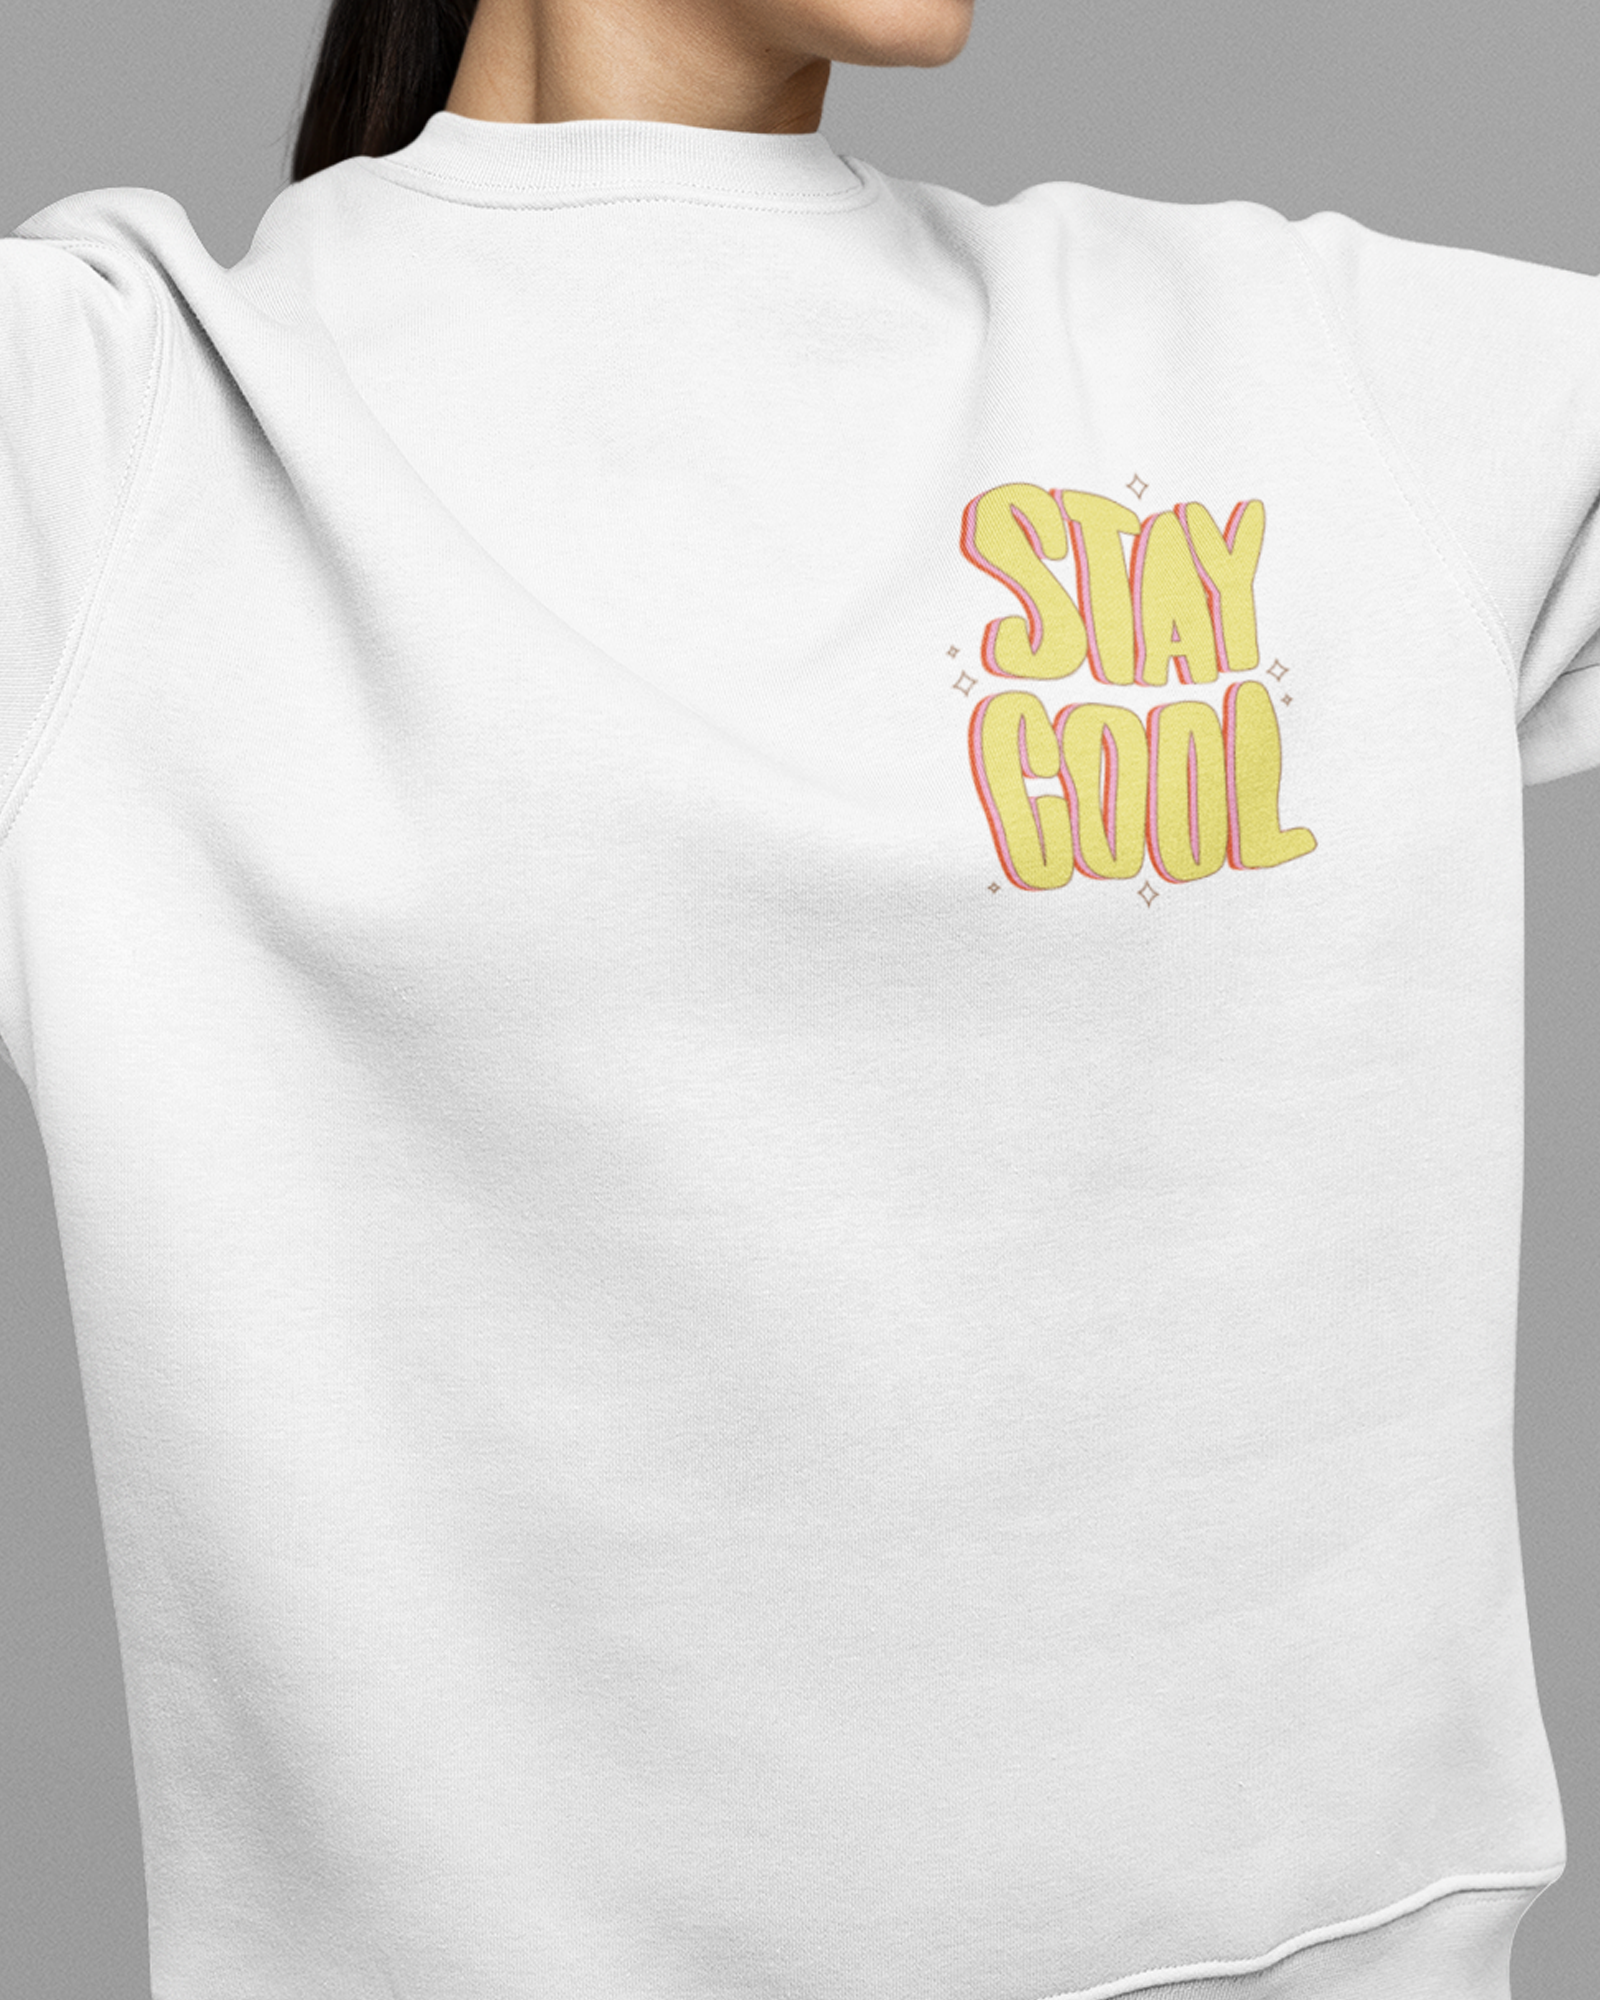 Stay Cool Sweatshirt